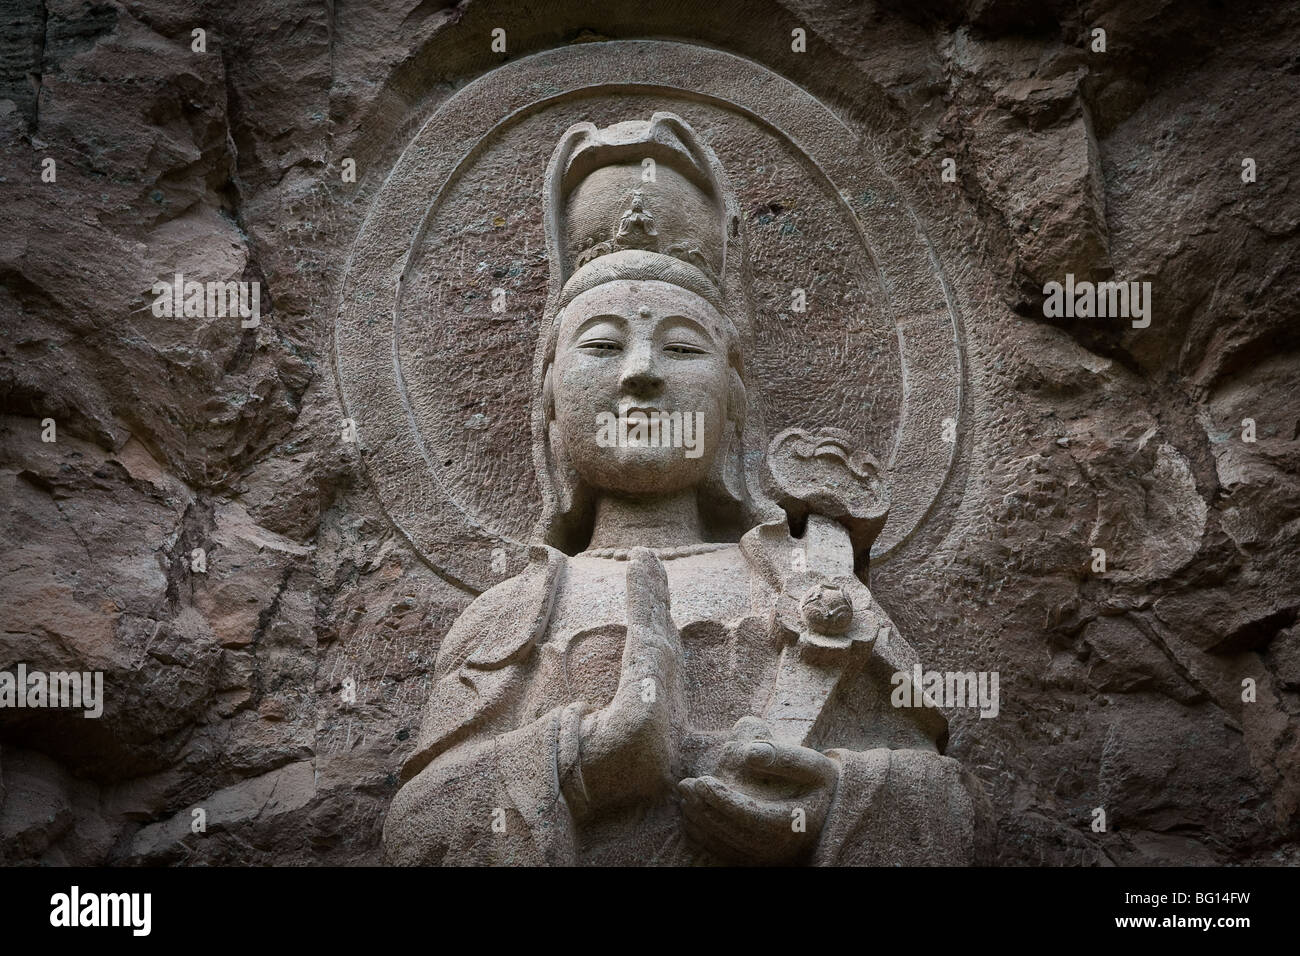 Statue of Guanyin (觀音) the Buddhist Goddess of Mercy Stock Photo